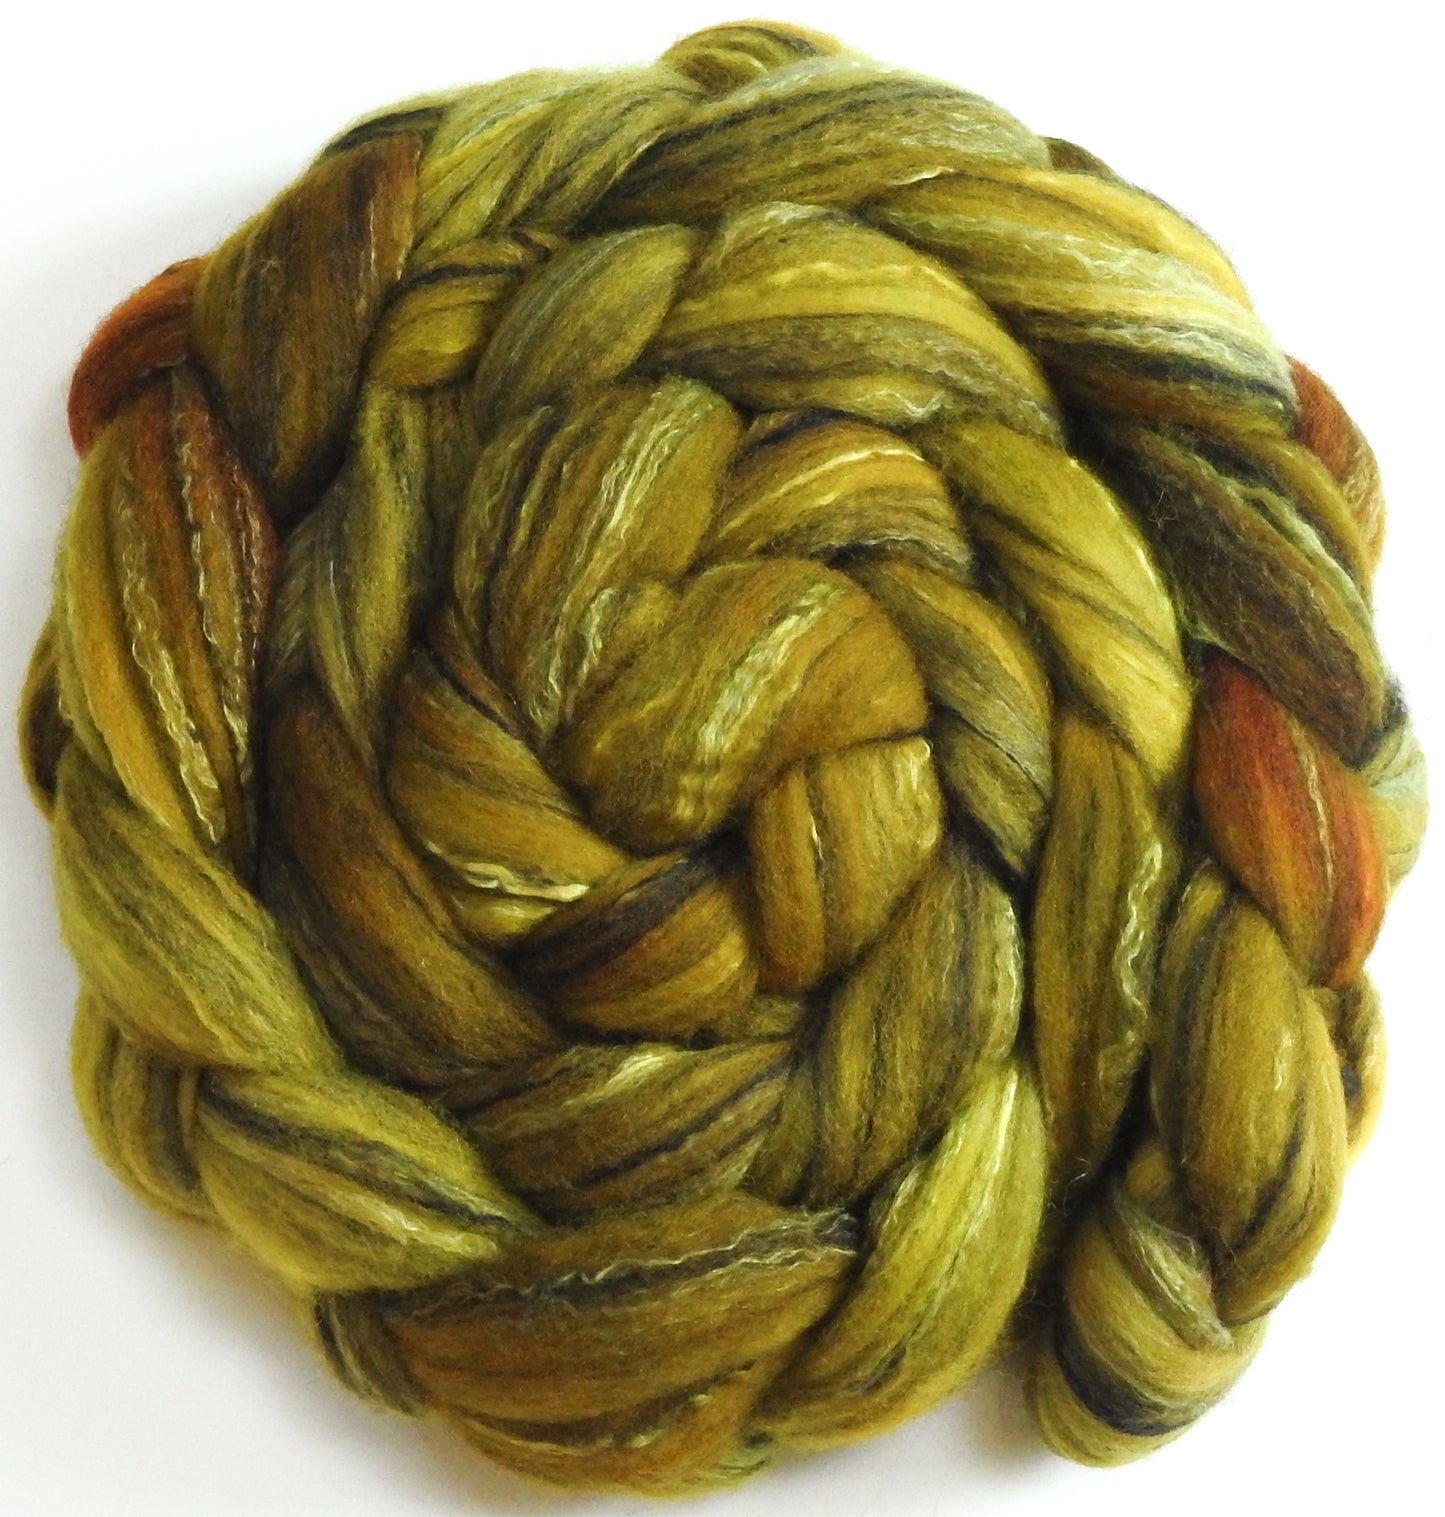 Spore-(6.1 oz.) Batt in a Braid #30- Charollais/ Rambouillet / Black tussah /Mulberry silk (40/40/10/10)